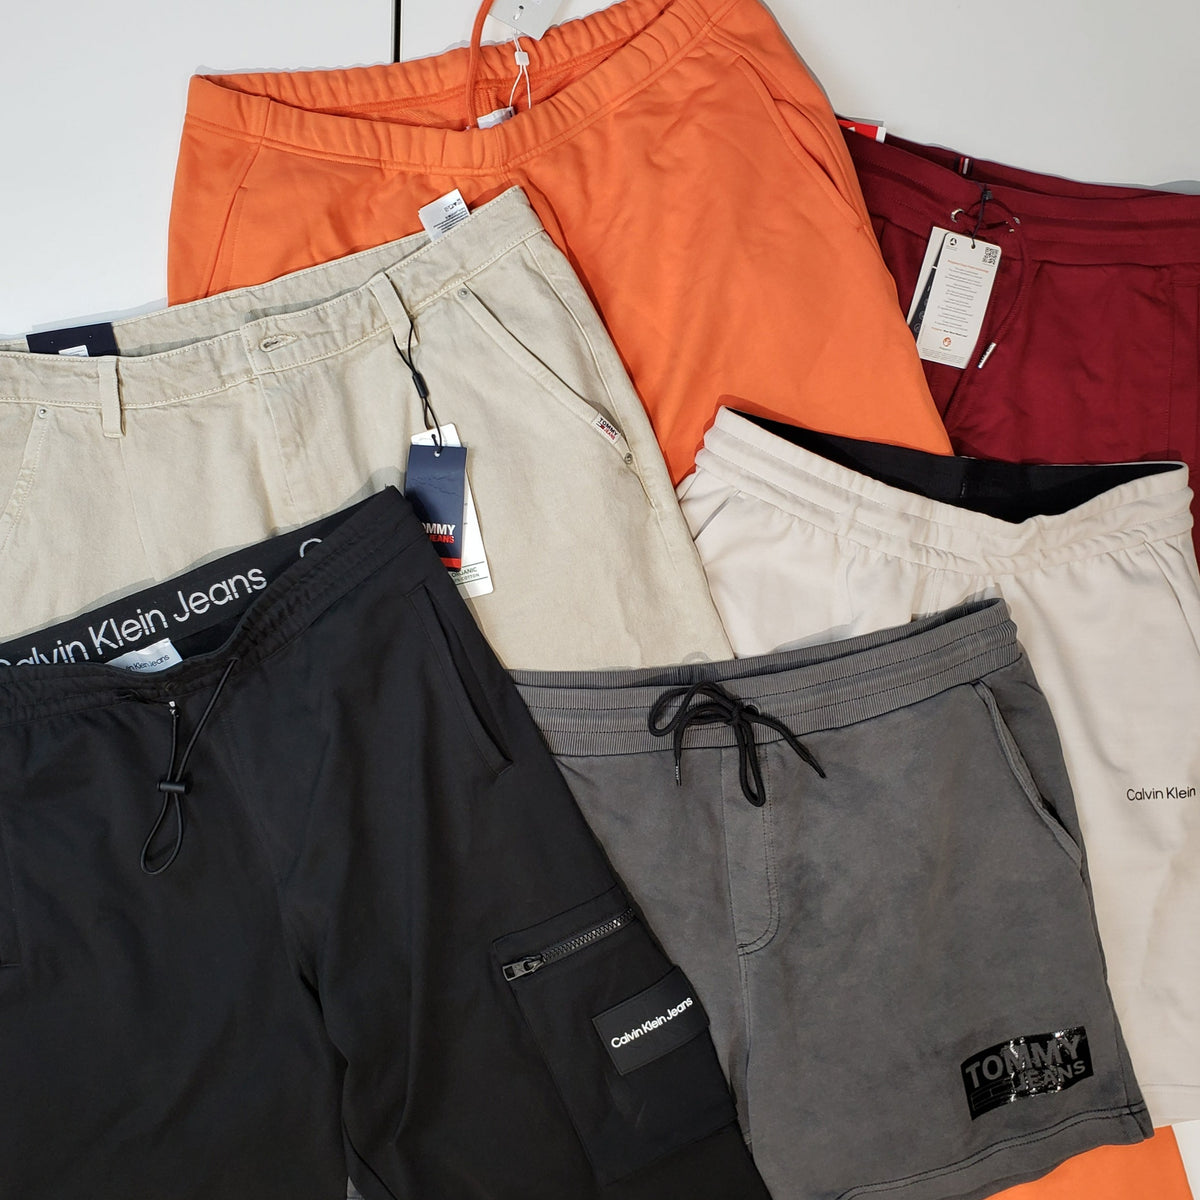 x6 Men's Mixed Tommy Hilfiger & Calvin Klein Colourful Trousers, Jeans & Shorts Bundle